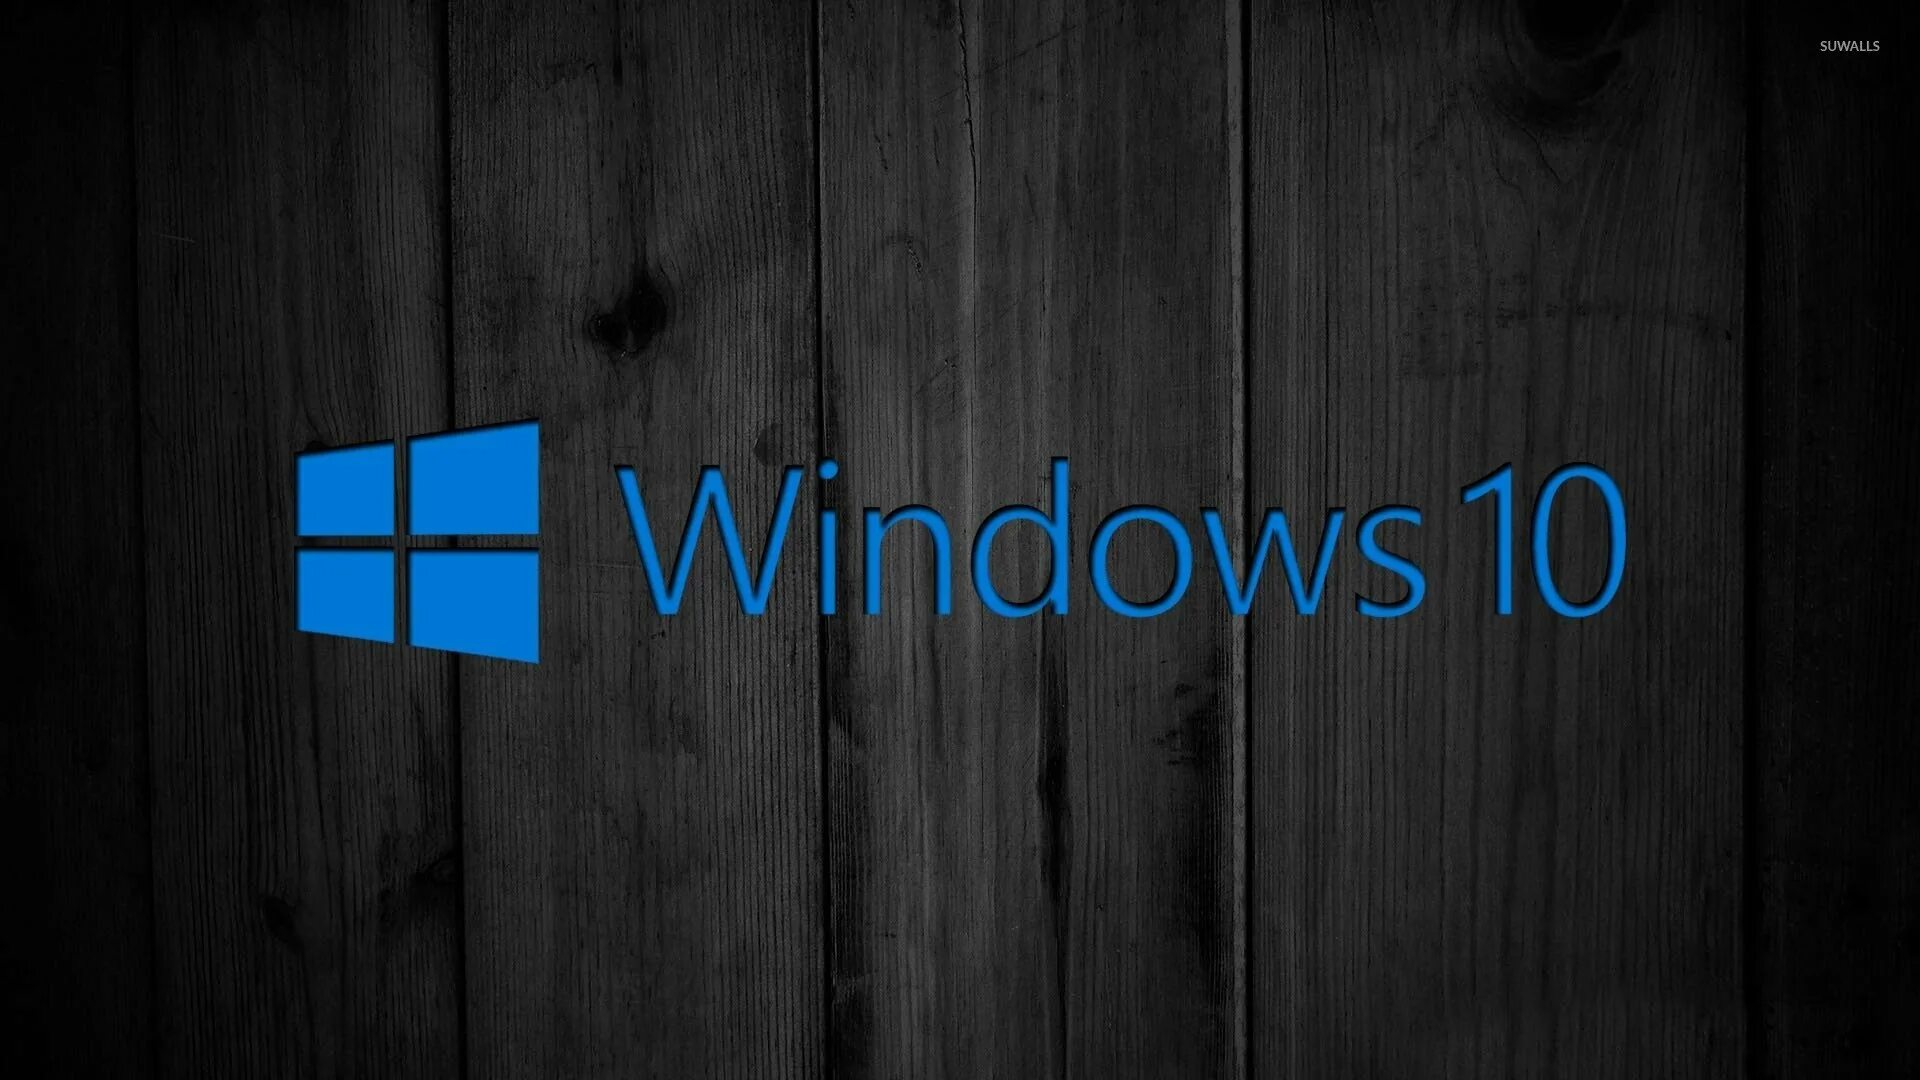 Best windows. Фон виндовс 10. Обои на рабочий стол Windows 10. Картинки Windows 10. Заставка виндовс 10.